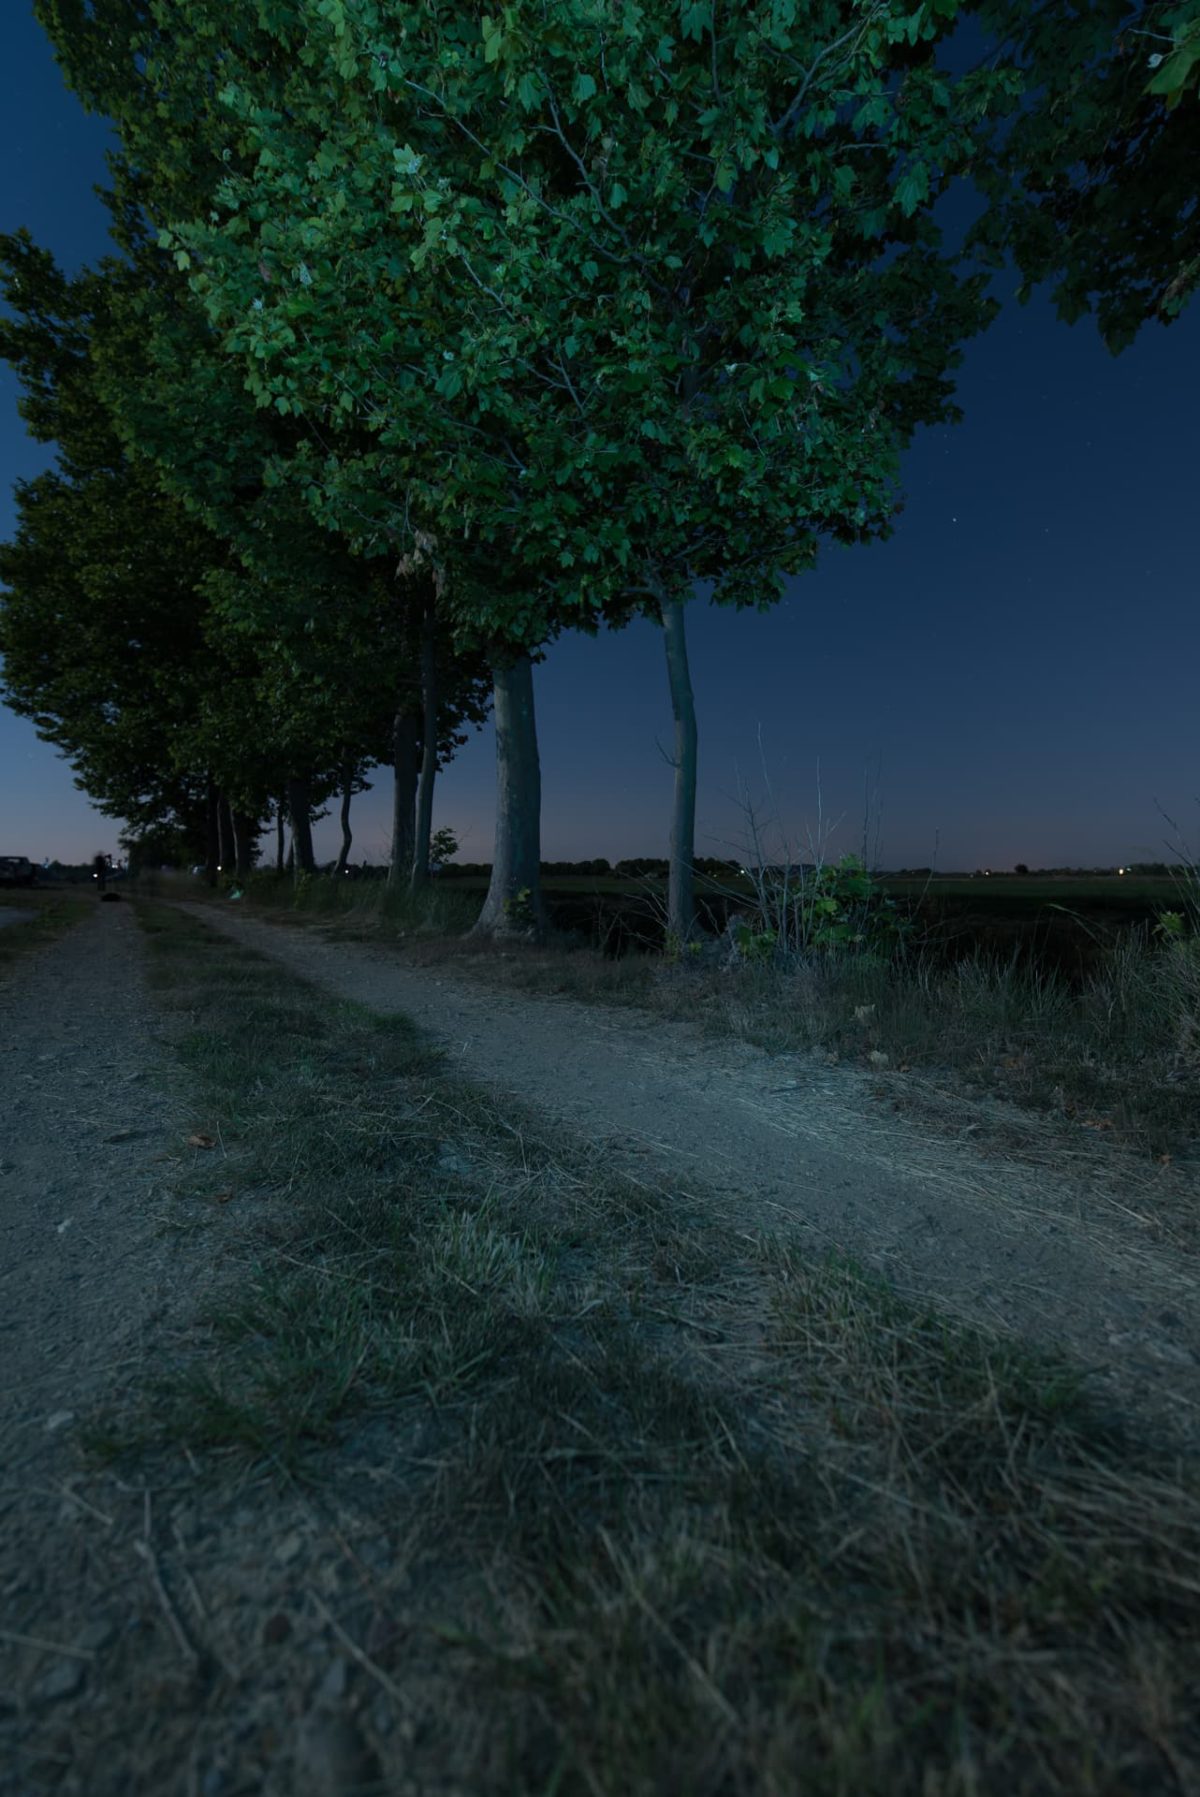 Nightscape, rural path